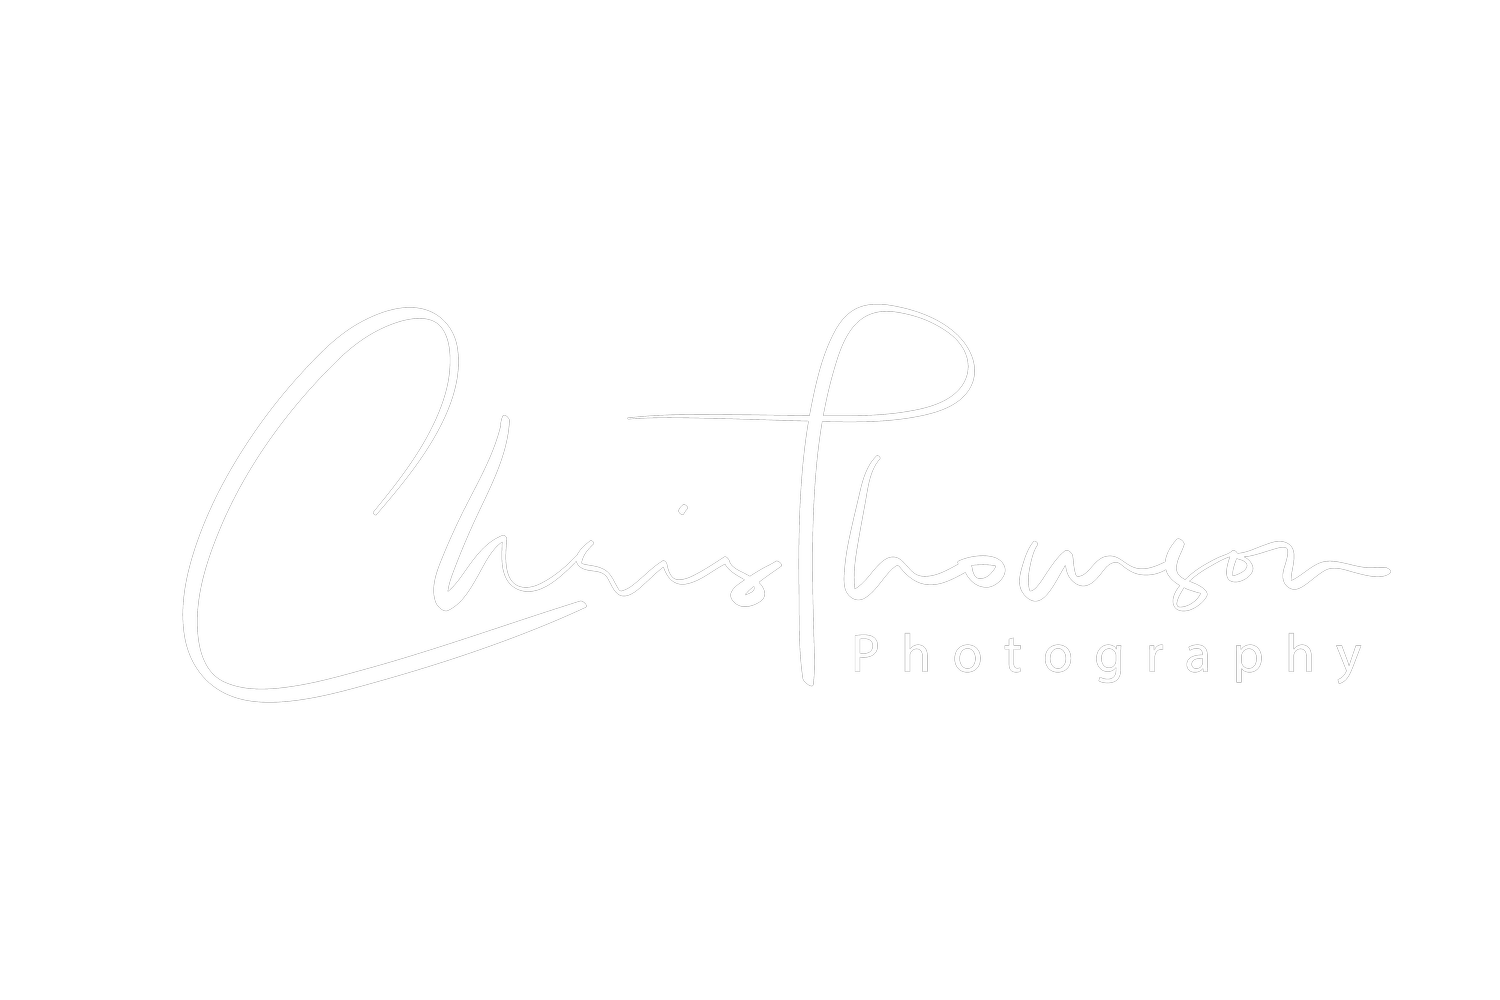 Chris Thomson Photography